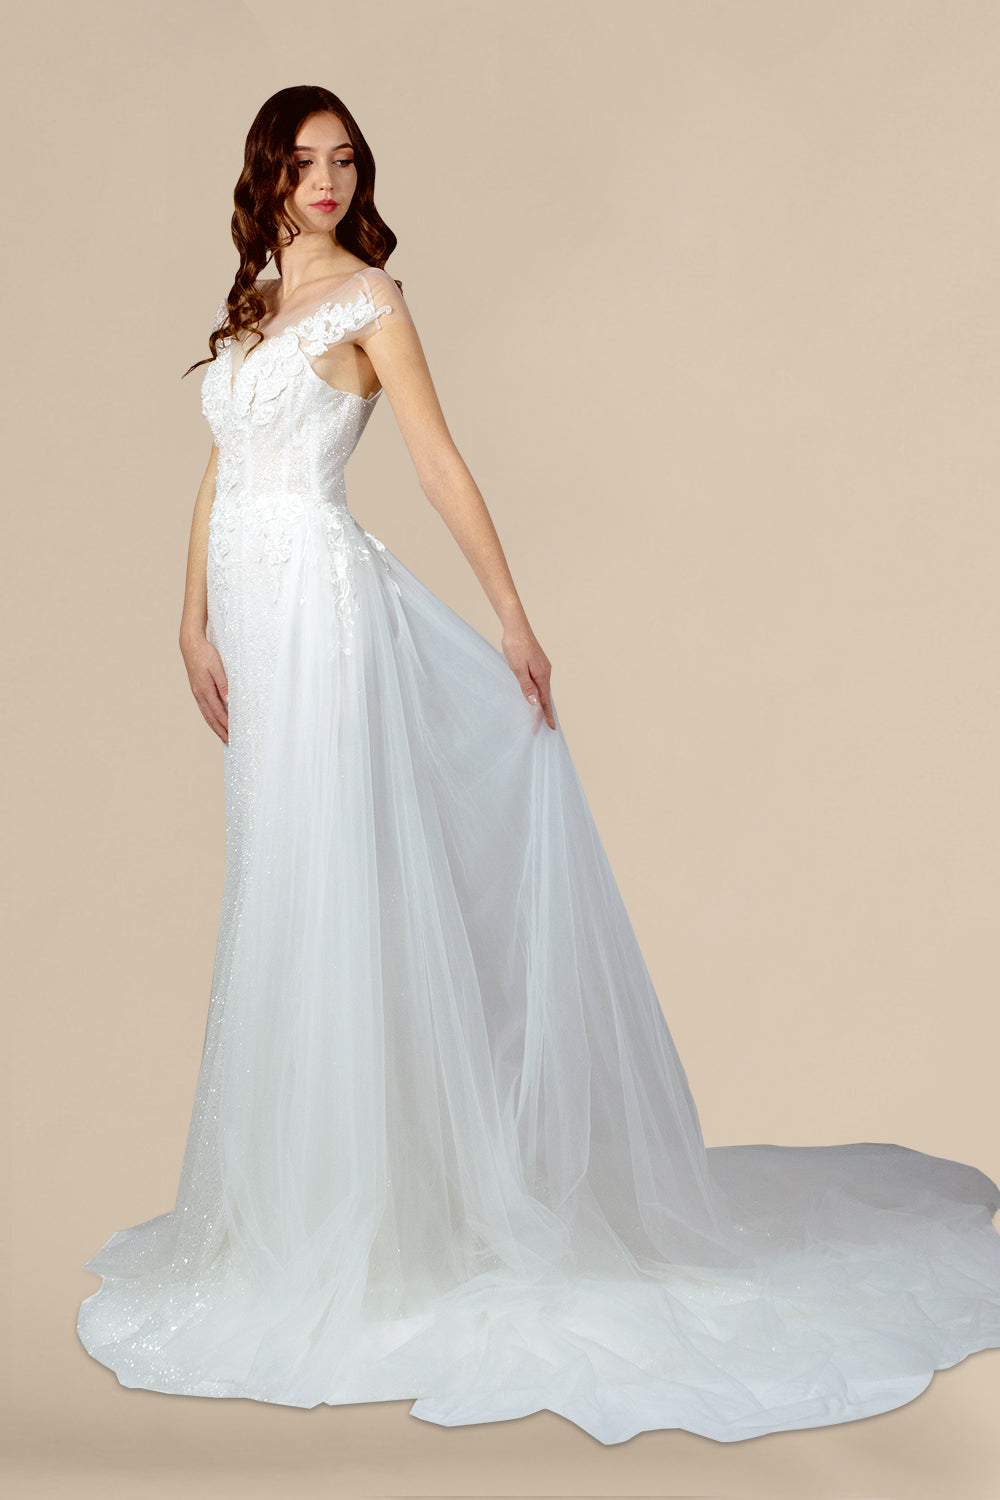 custom made wedding bridal gowns dressmaker perth australia plus sizes wedding dresses envious bridal & formal